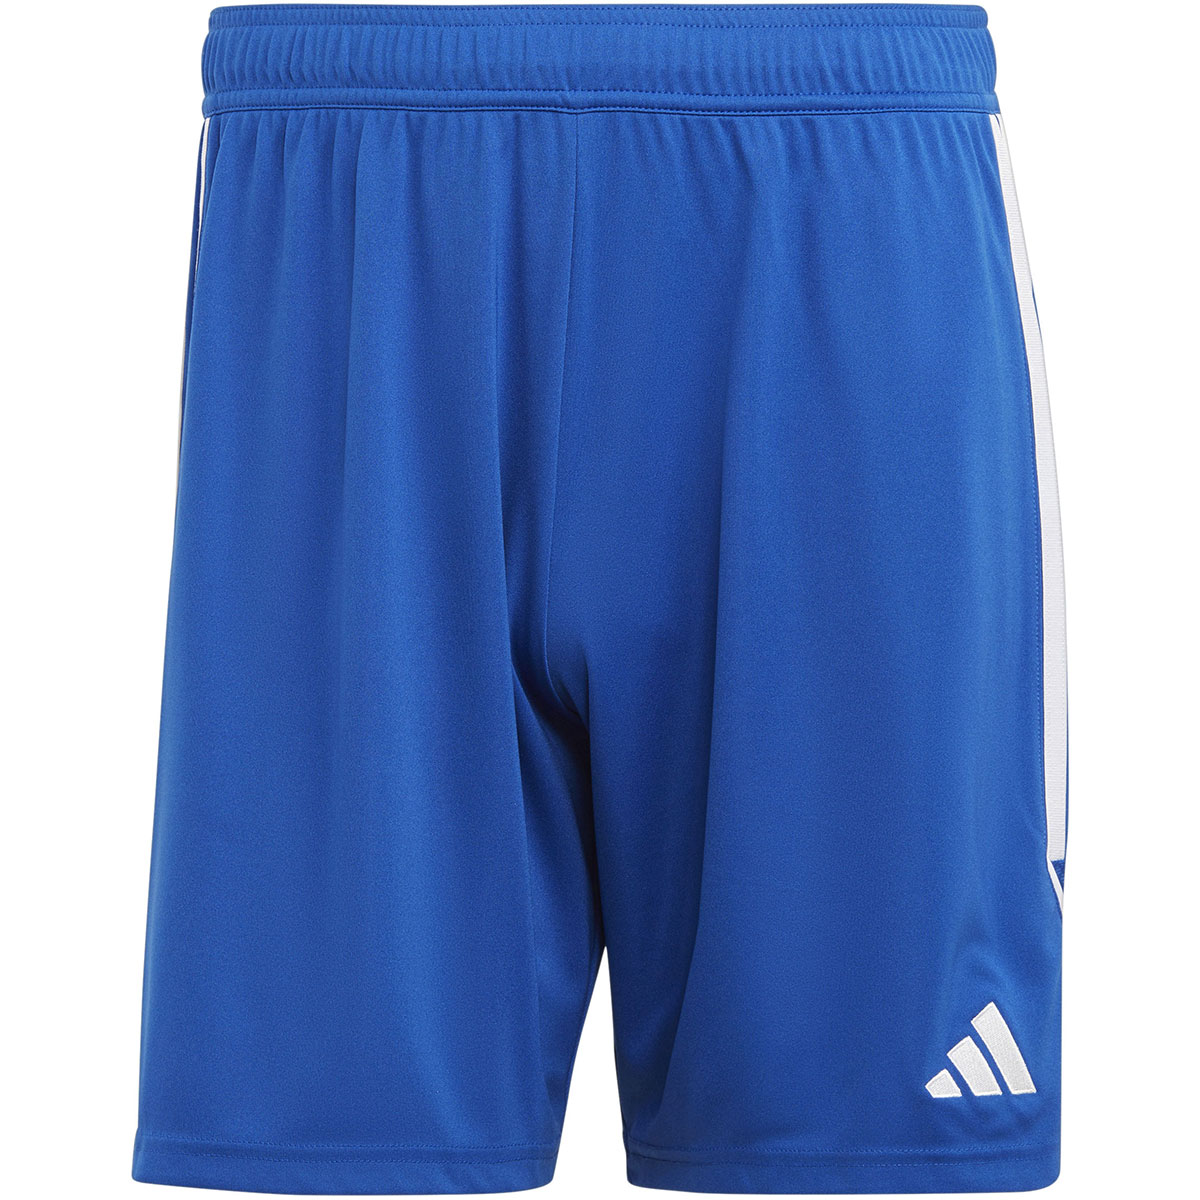 Adidas Herren Shorts Tiro 23 blau-weiß